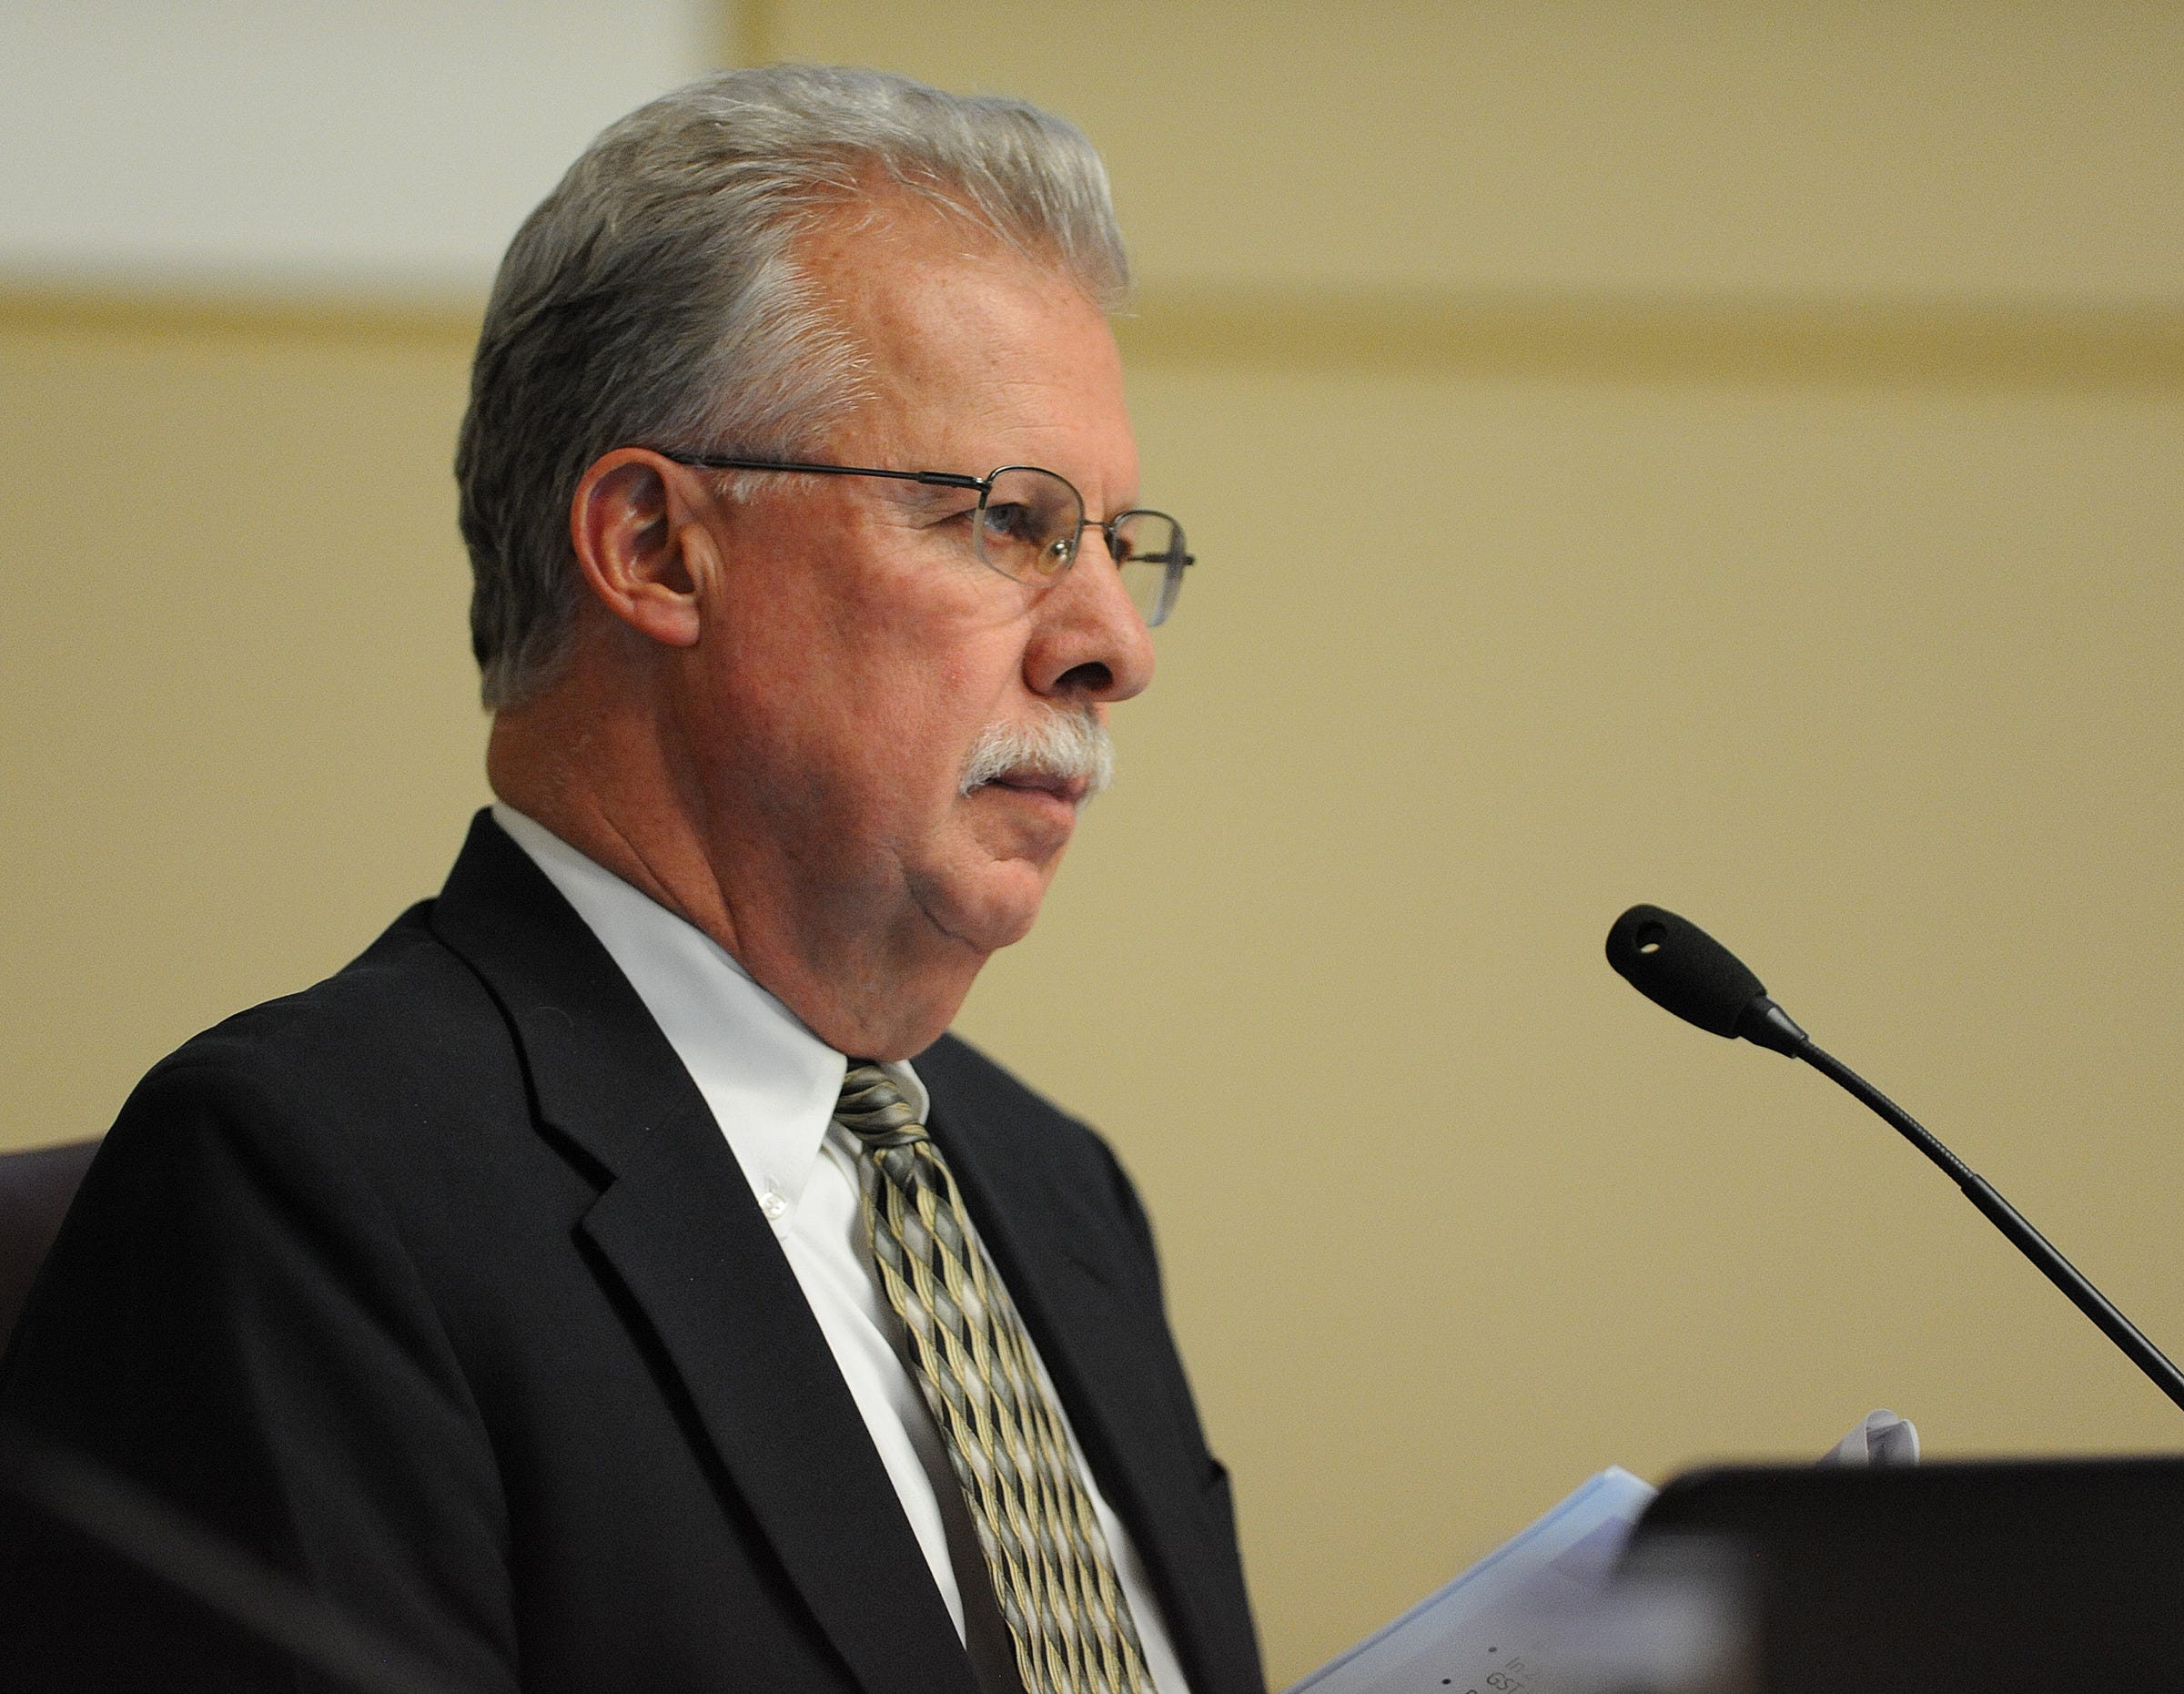 UPDATE: Washoe judge Humke apologizes for mishandled cases, wants to regain public trust